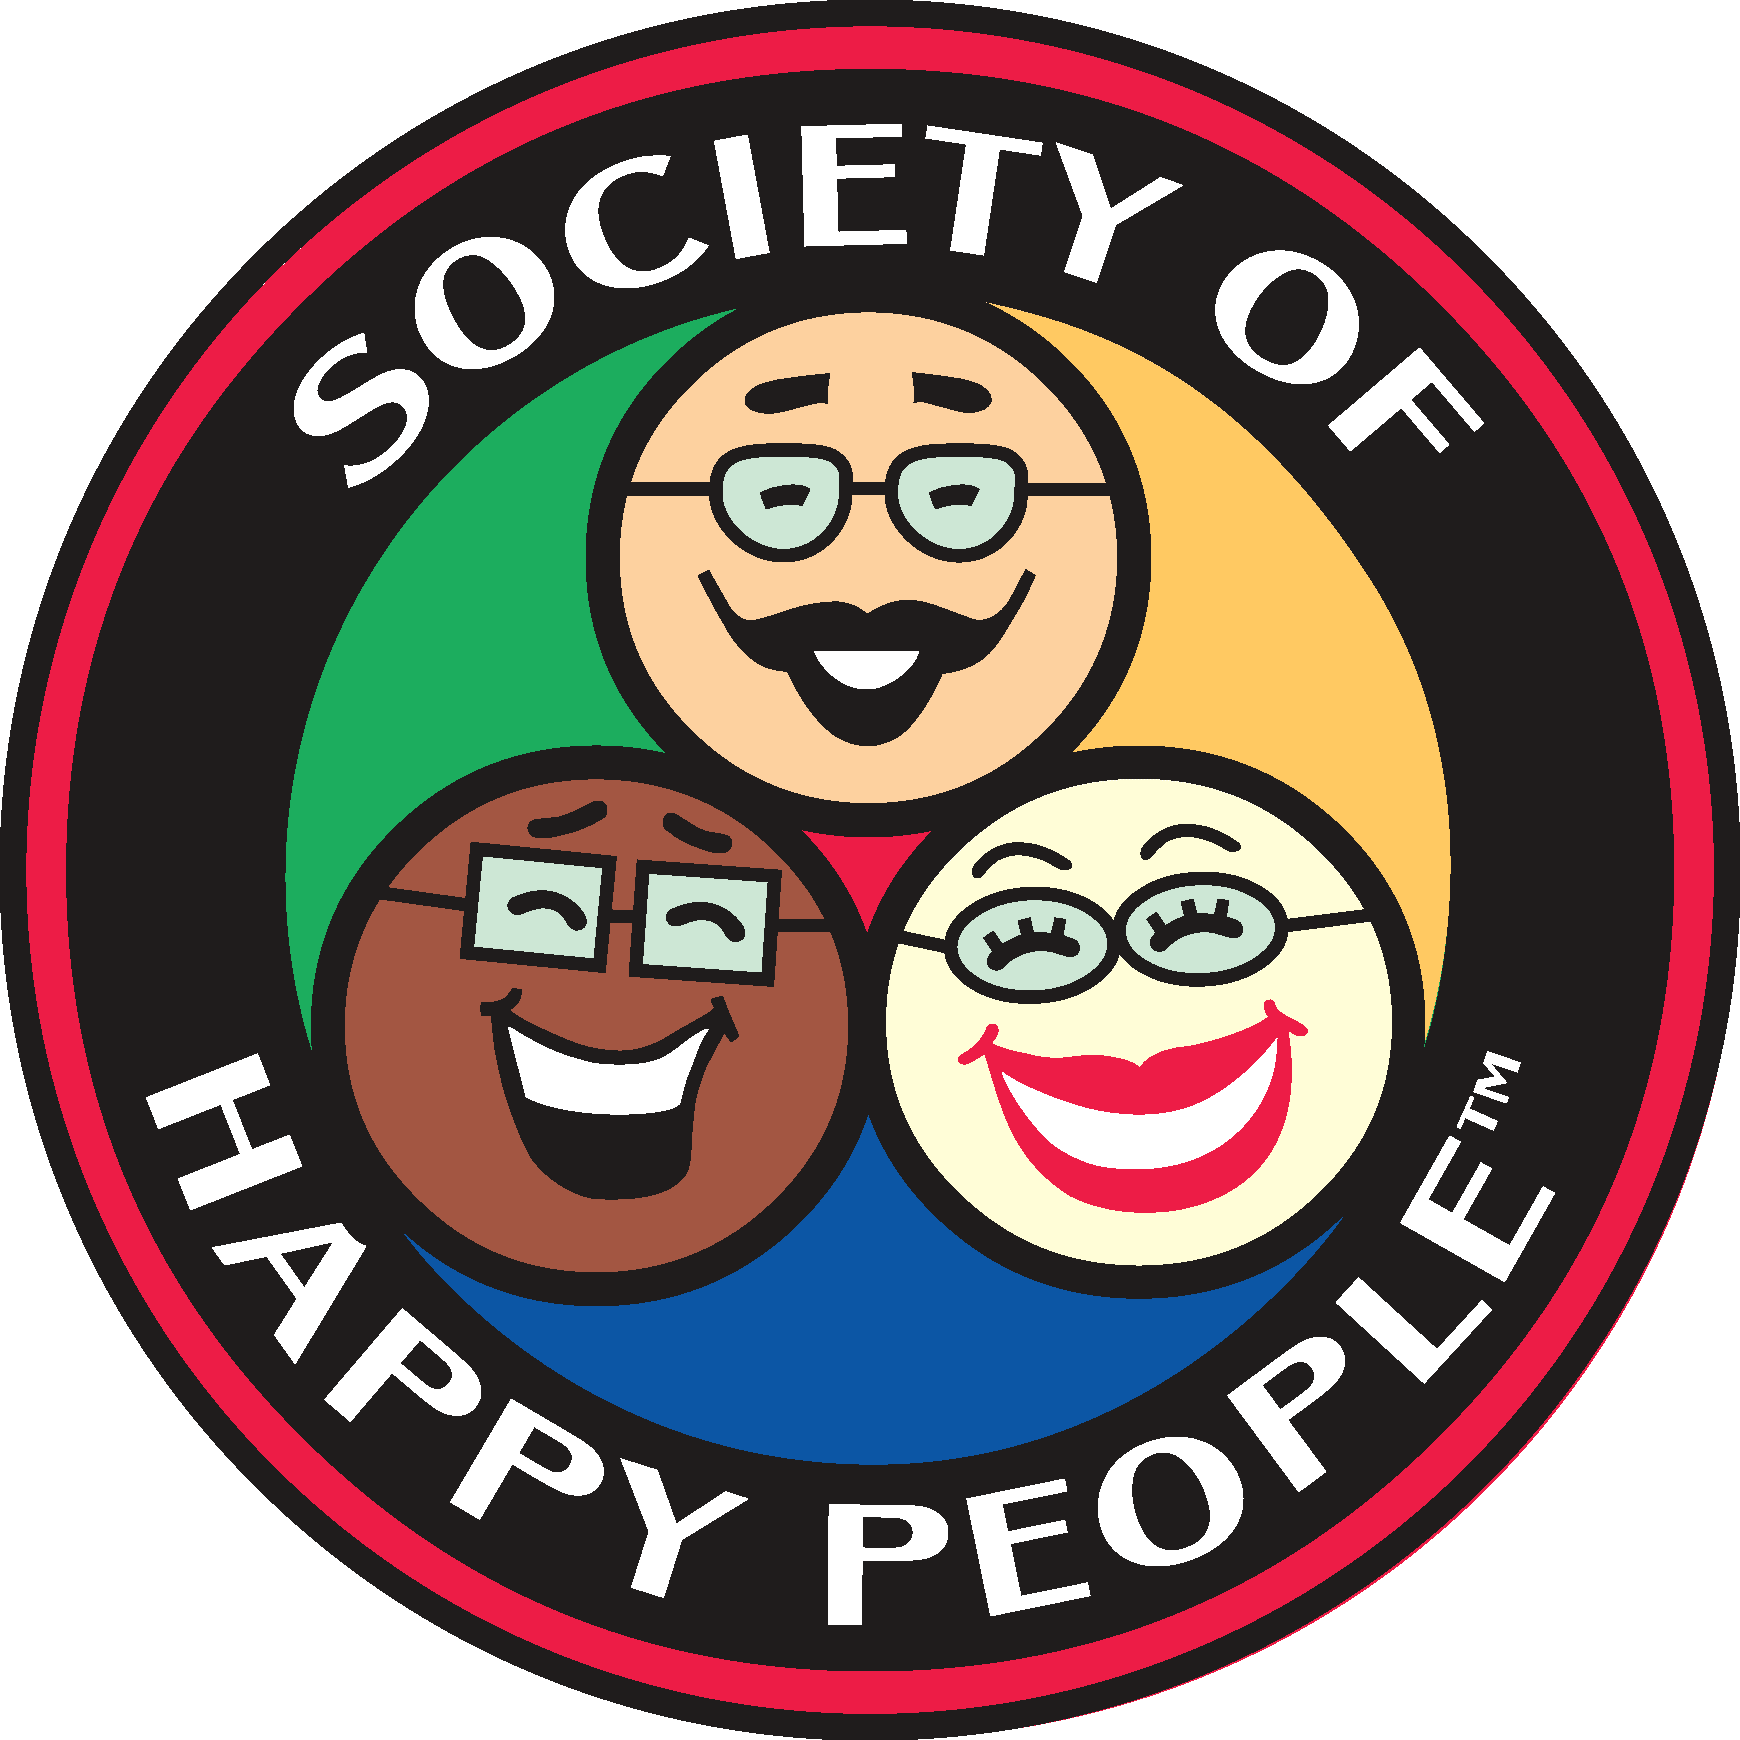 The Society of happy people logo